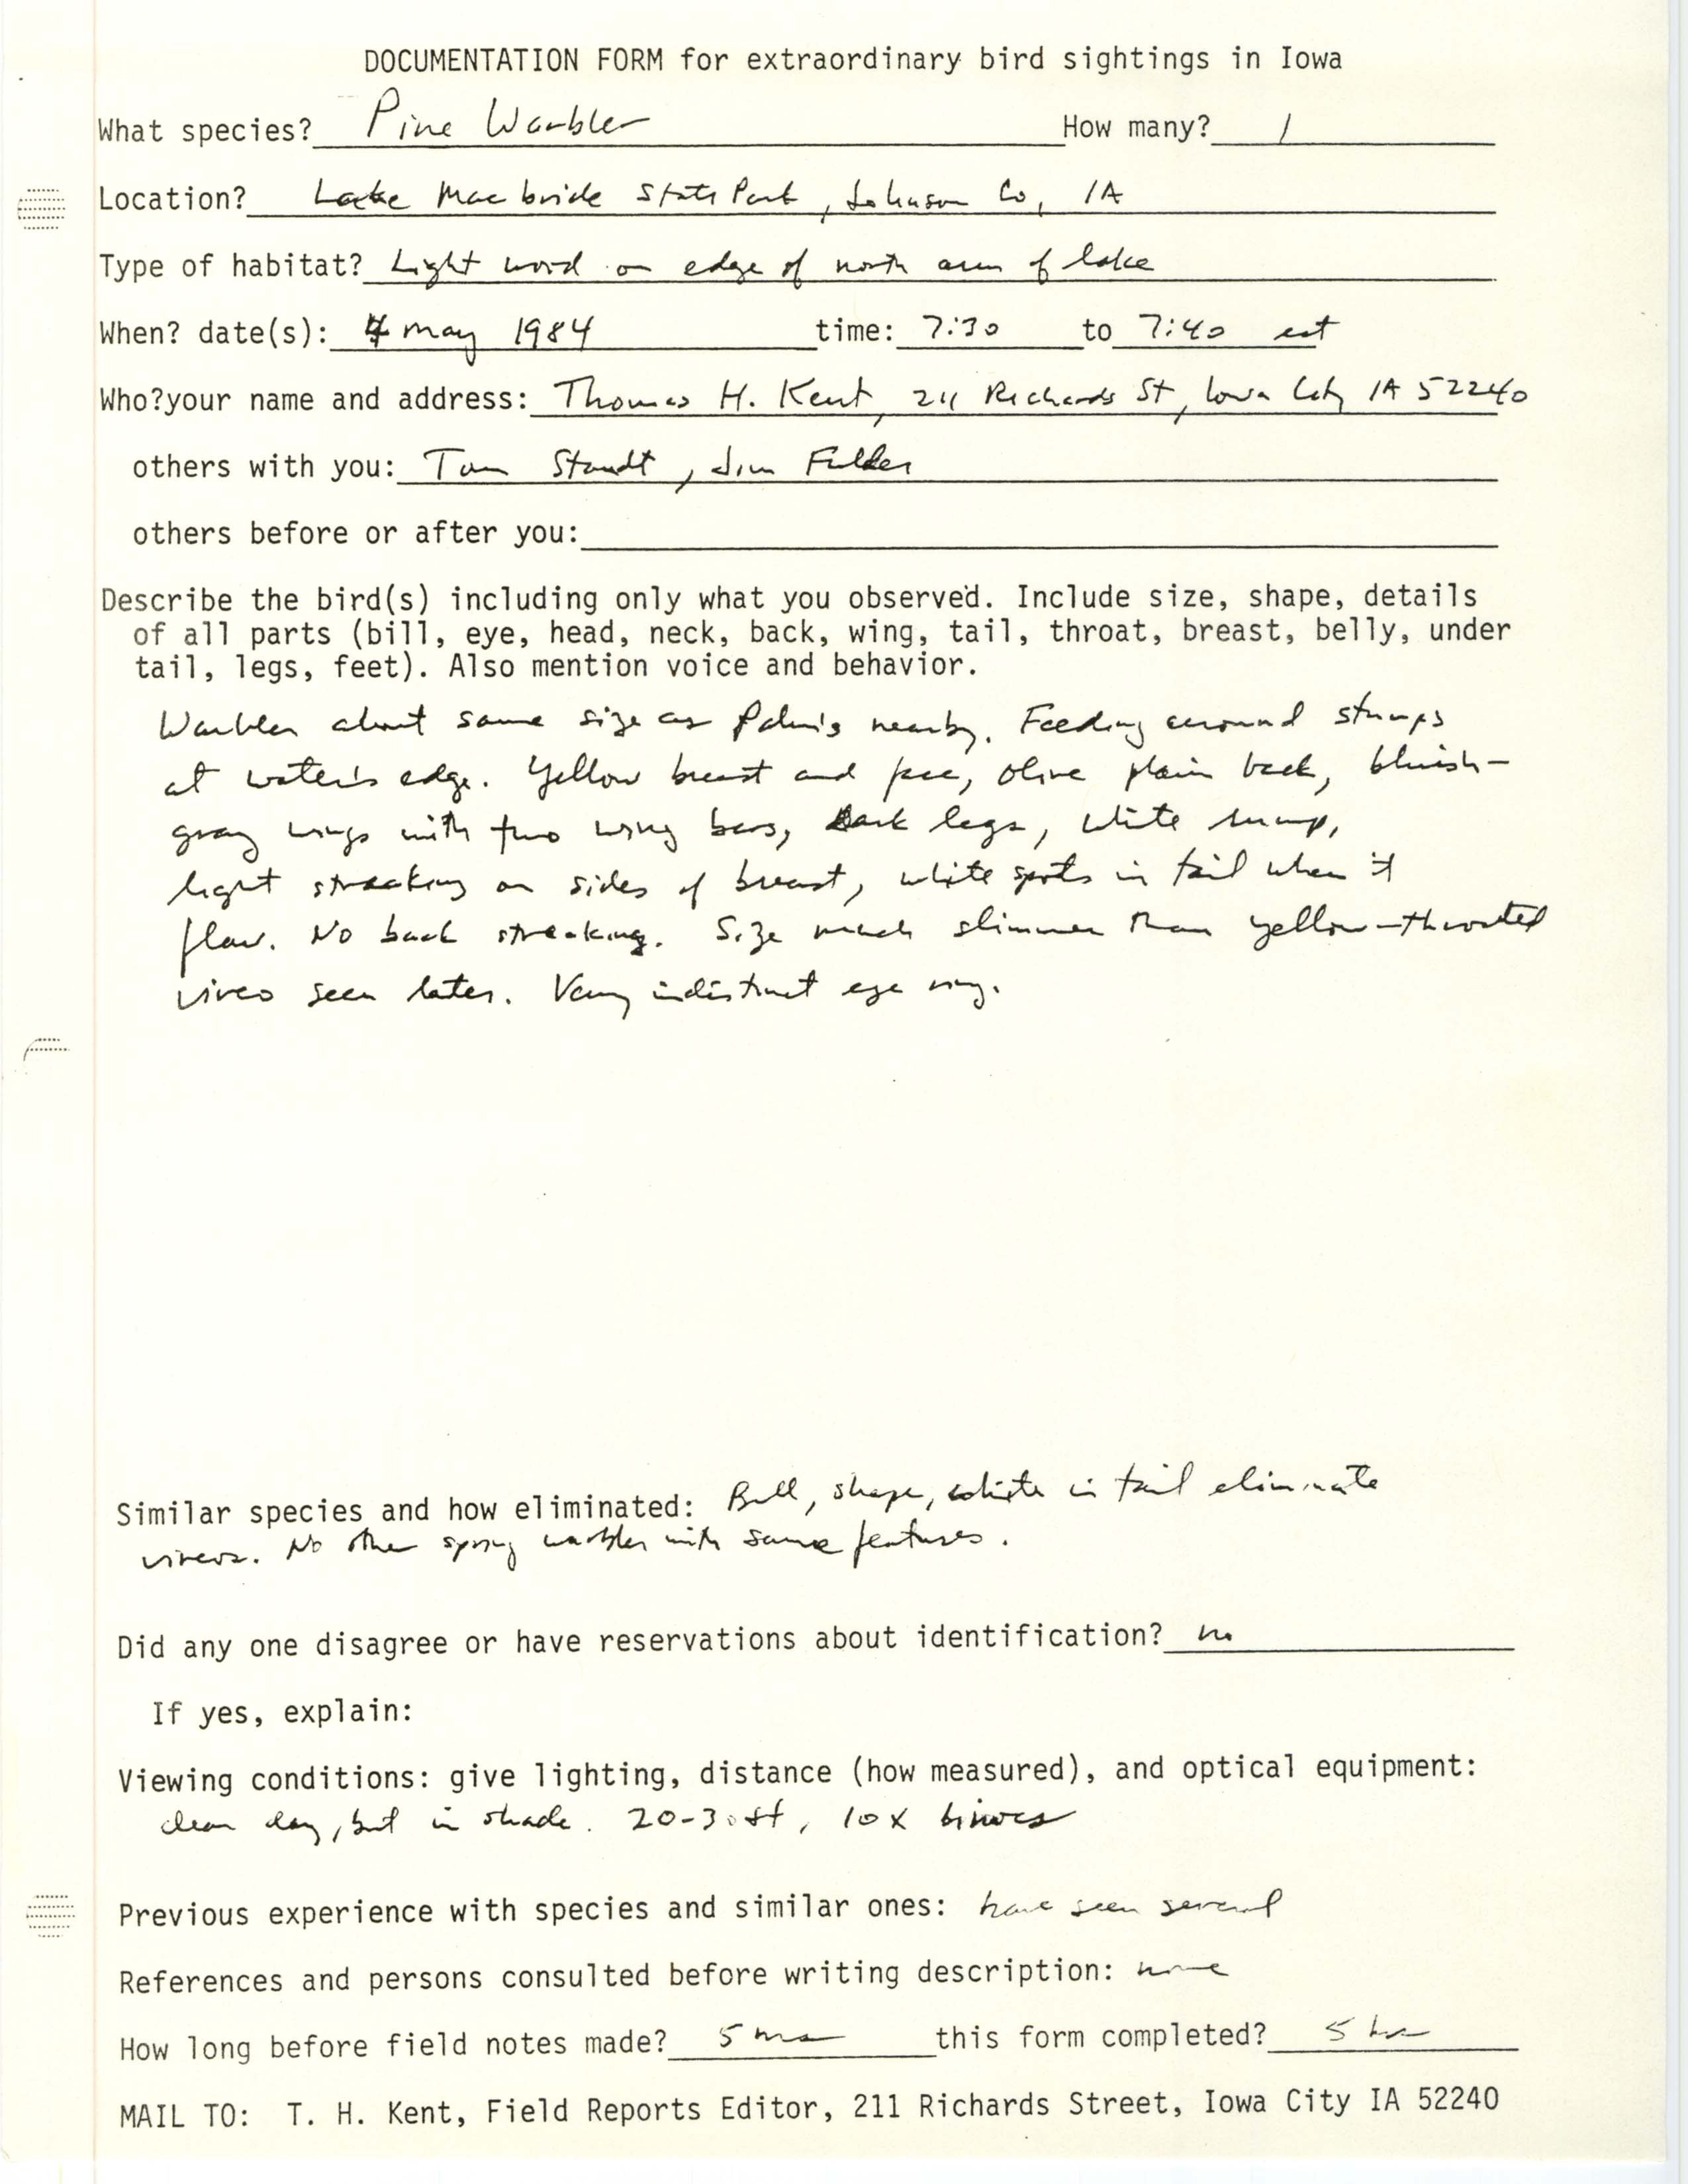 Rare bird documentation form for Pine Warbler at Lake MacBride State Park in 1984